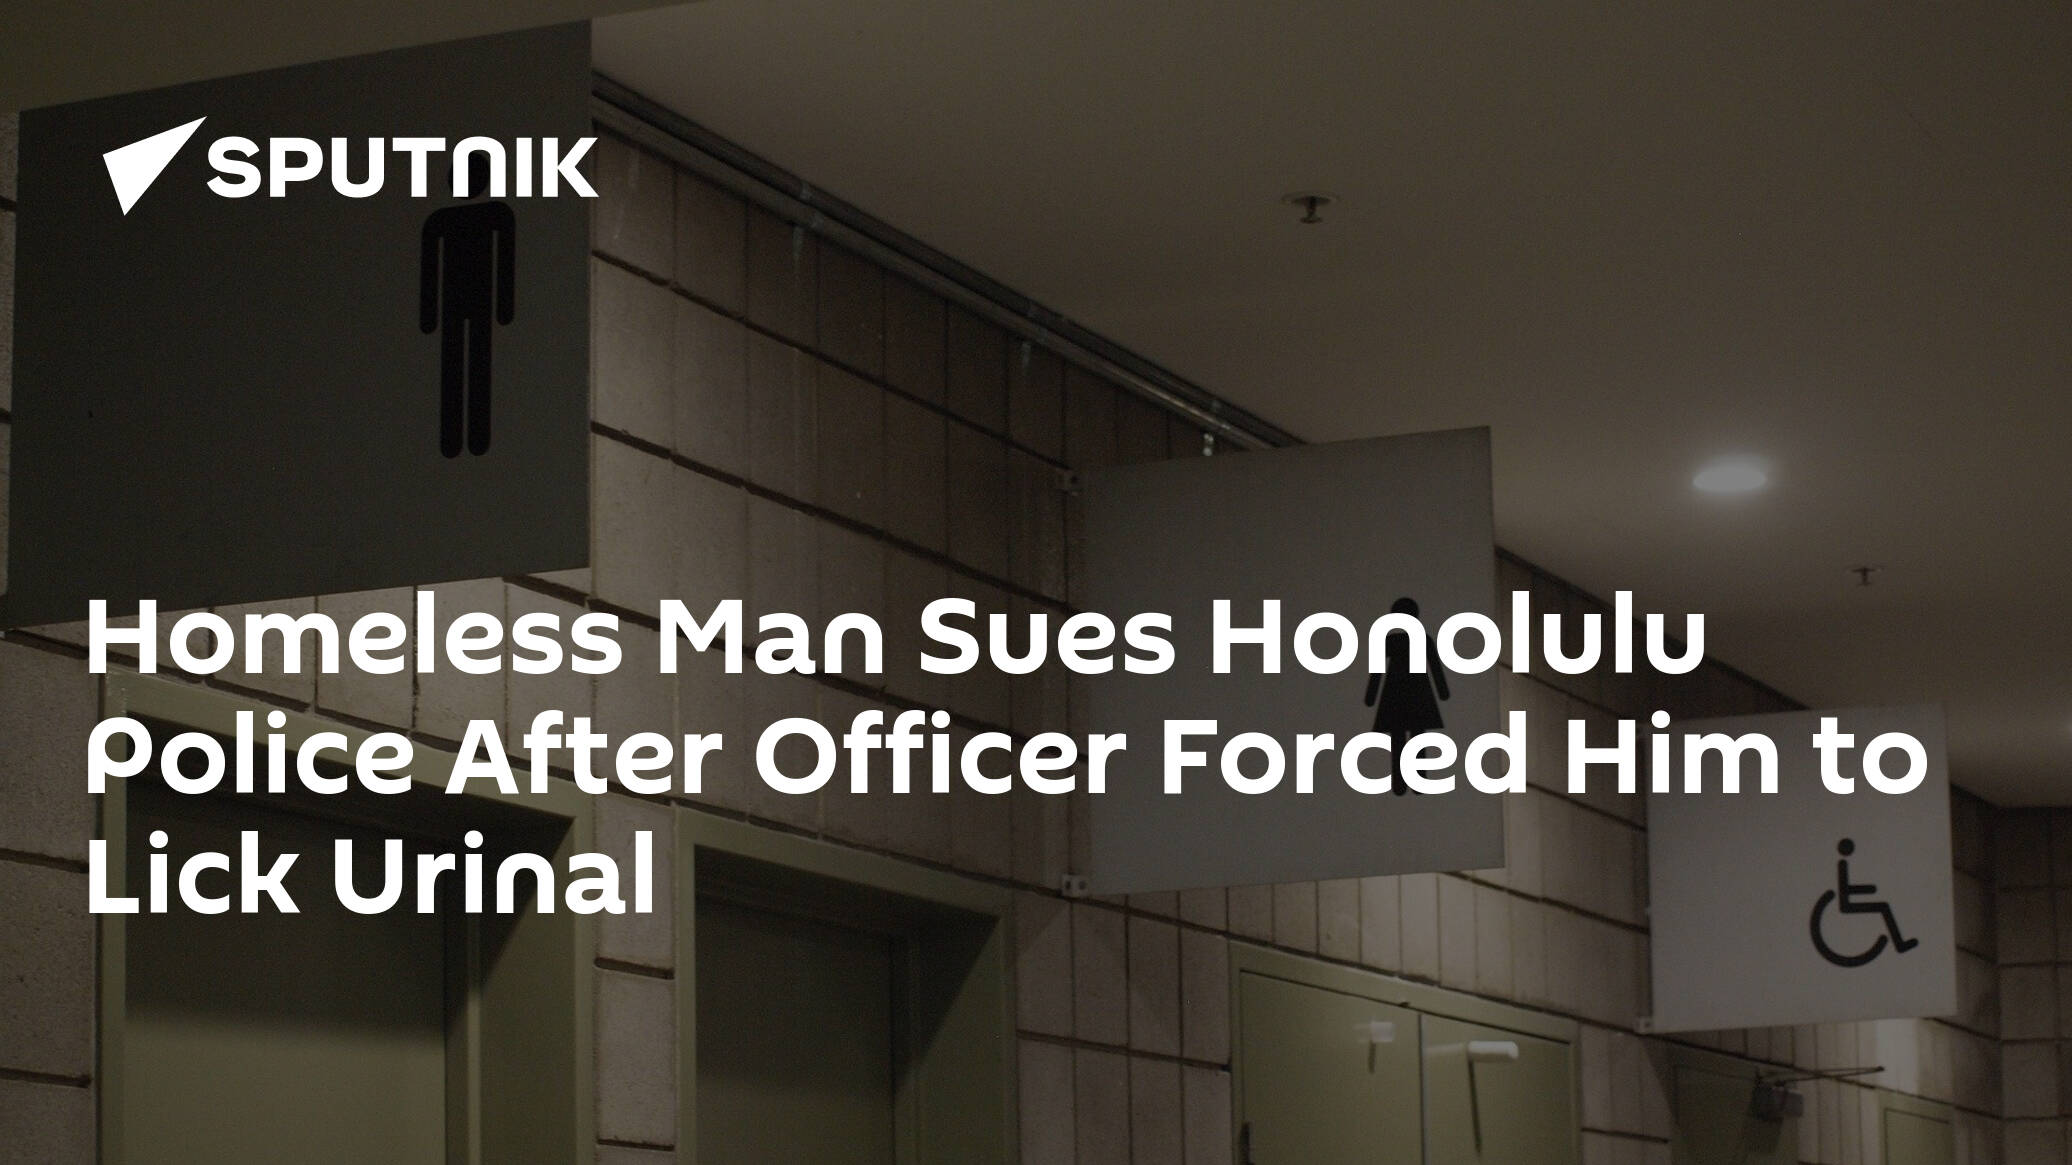 Homeless Man Sues Honolulu Police After Officer Forced Him To Lick Urinal 04 02 2020 Sputnik